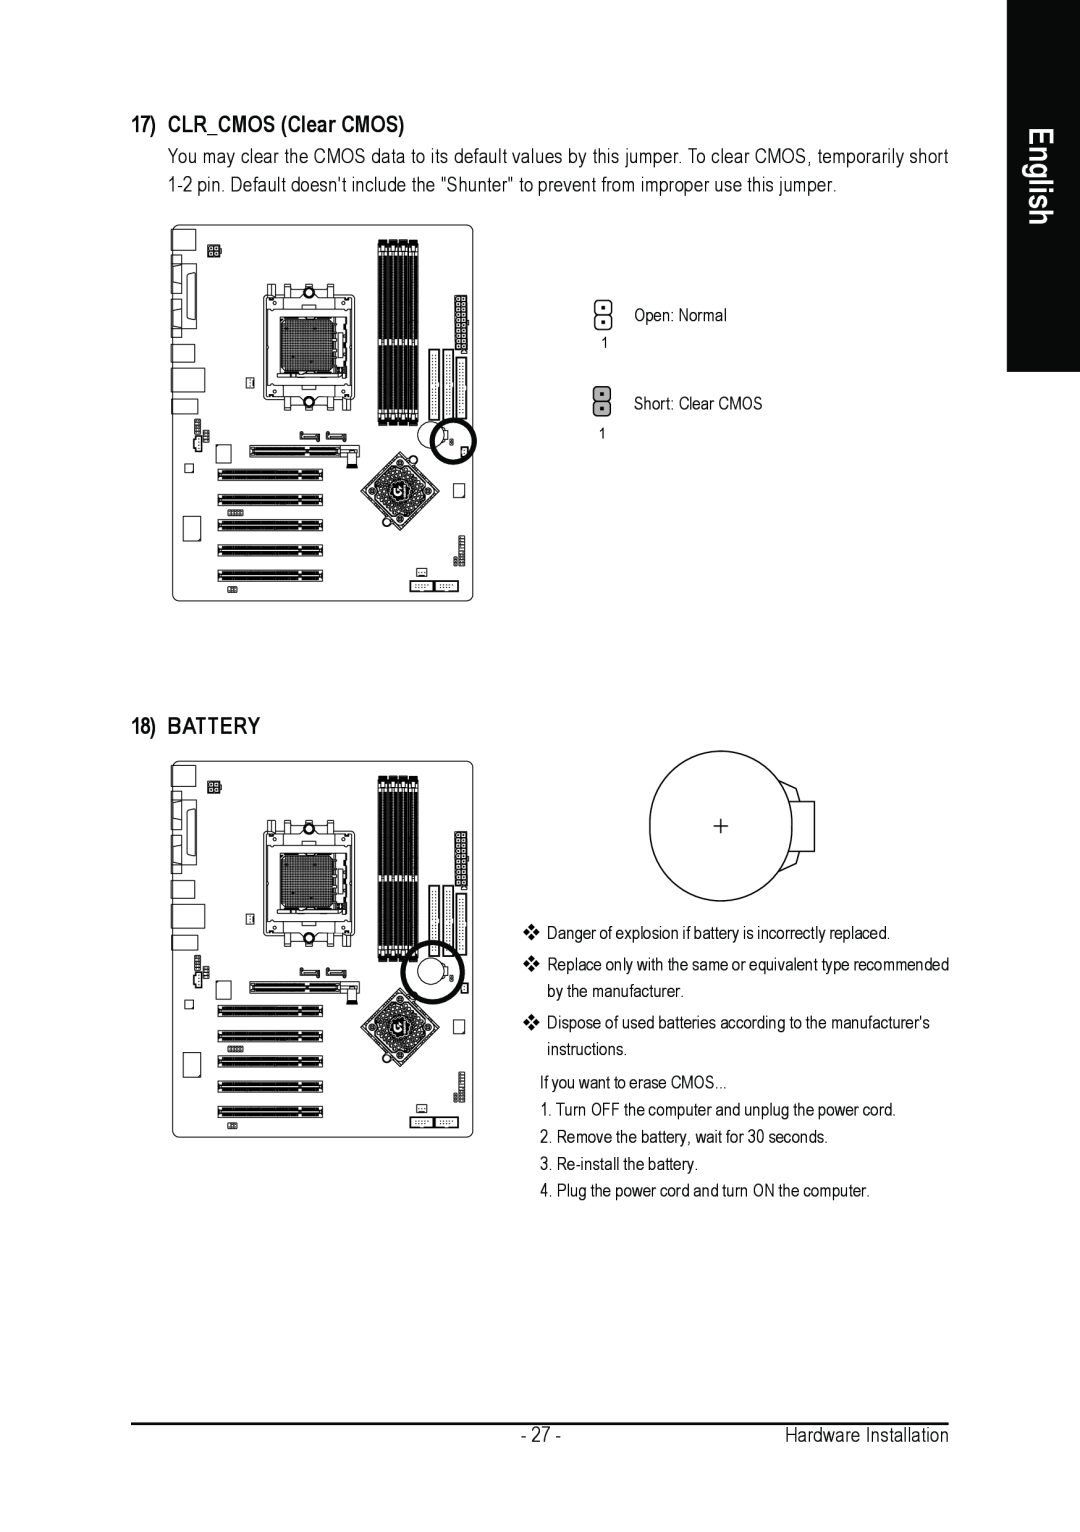 AMD GA-K8NSC-939 user manual CLRCMOS Clear CMOS, Battery, English 